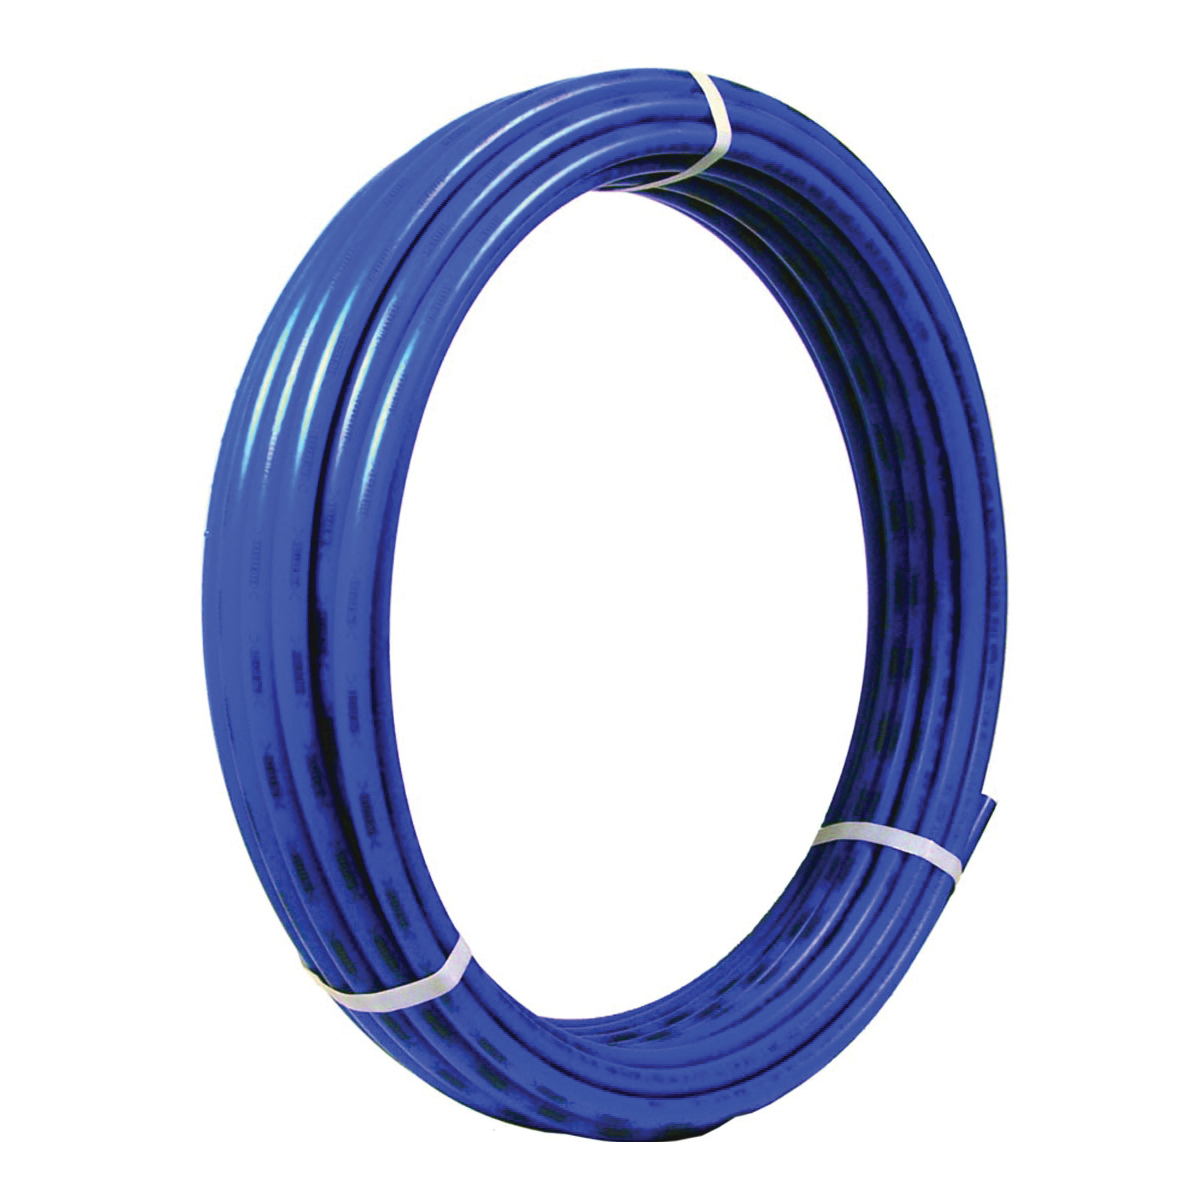 APPB30012 PEX-B Pipe Tubing, 1/2 in, Blue, 300 ft L